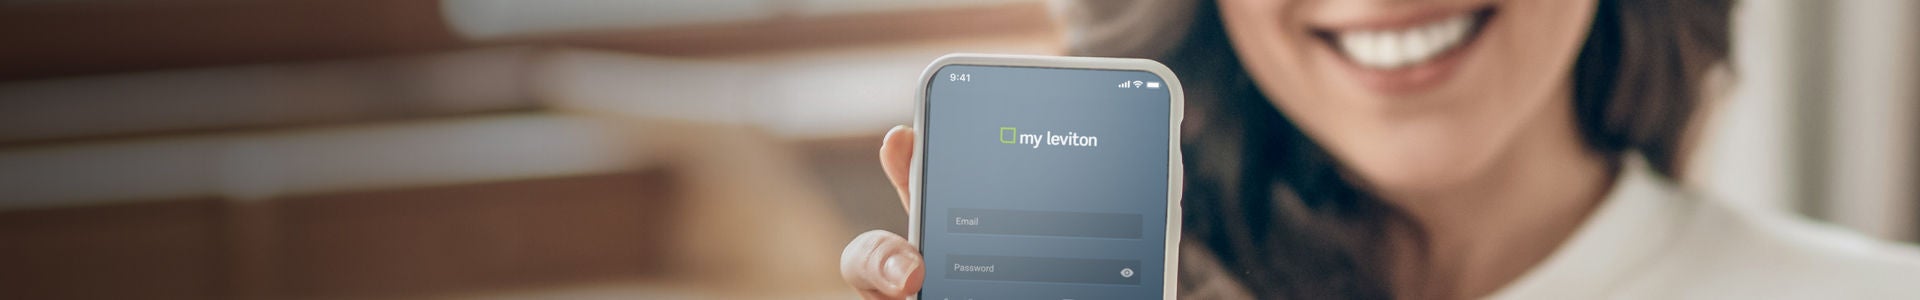 close up of login screen of My Leviton app